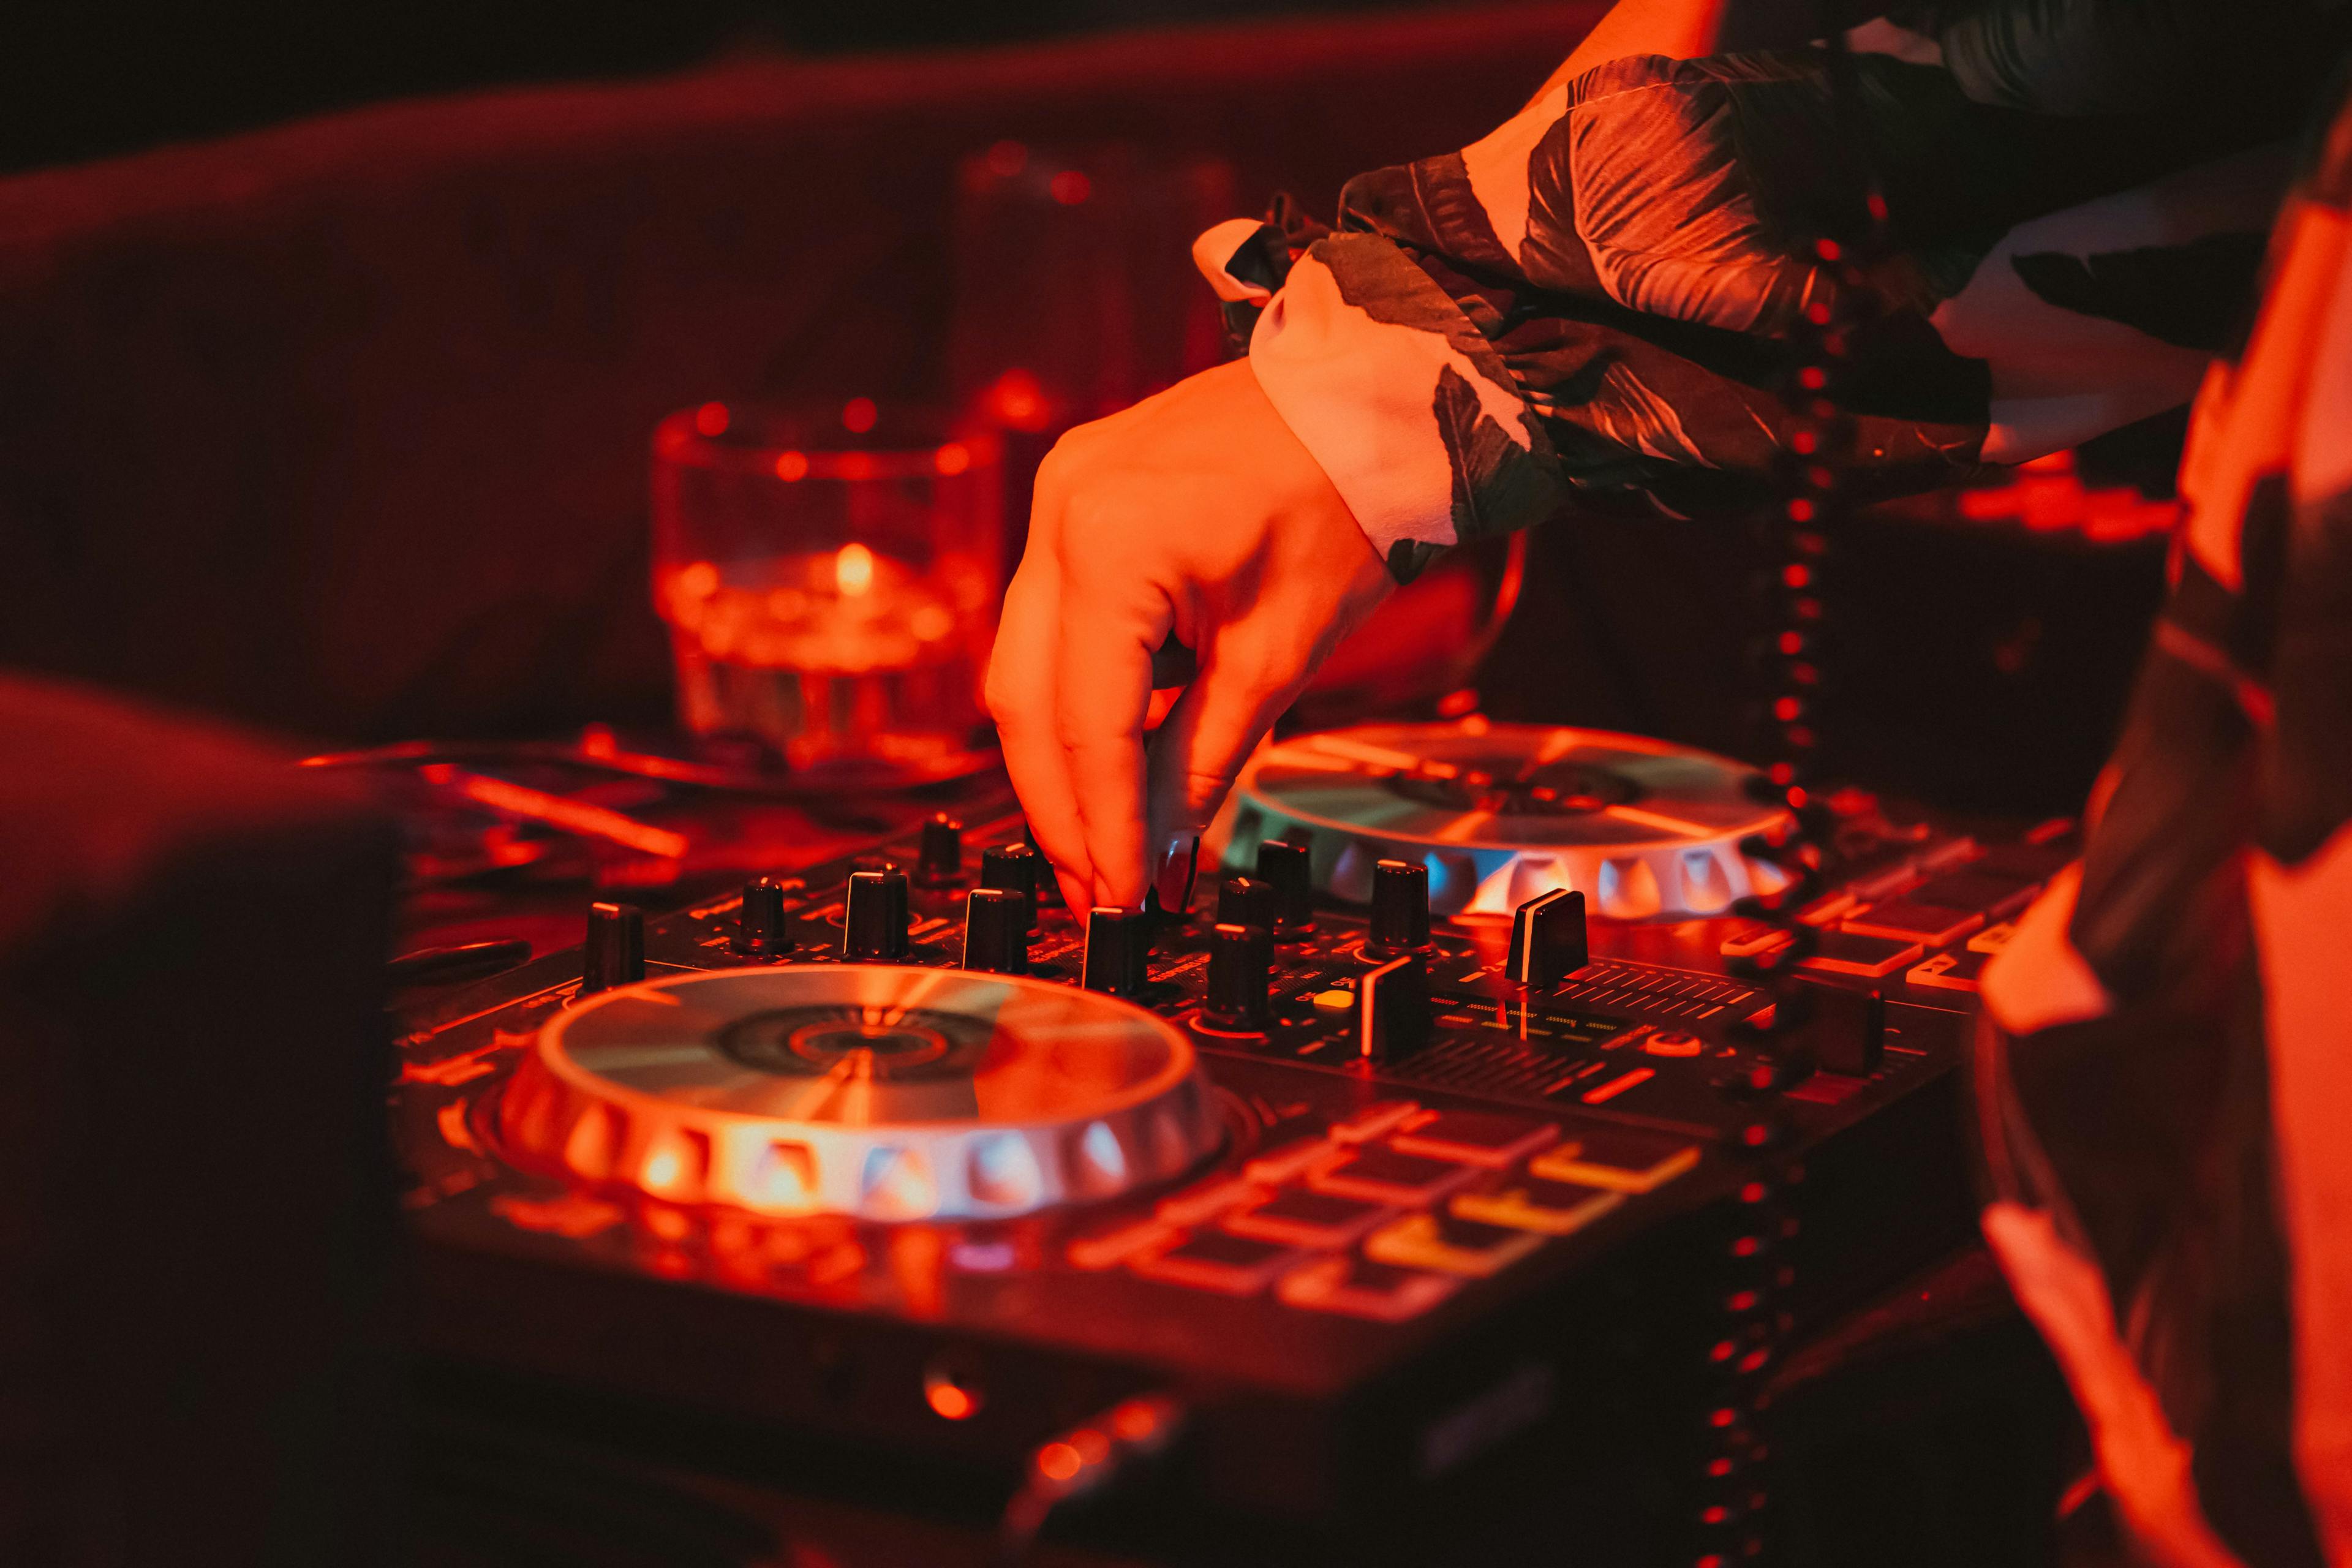 DJ mixing music on turntables at Apres ski nightclub